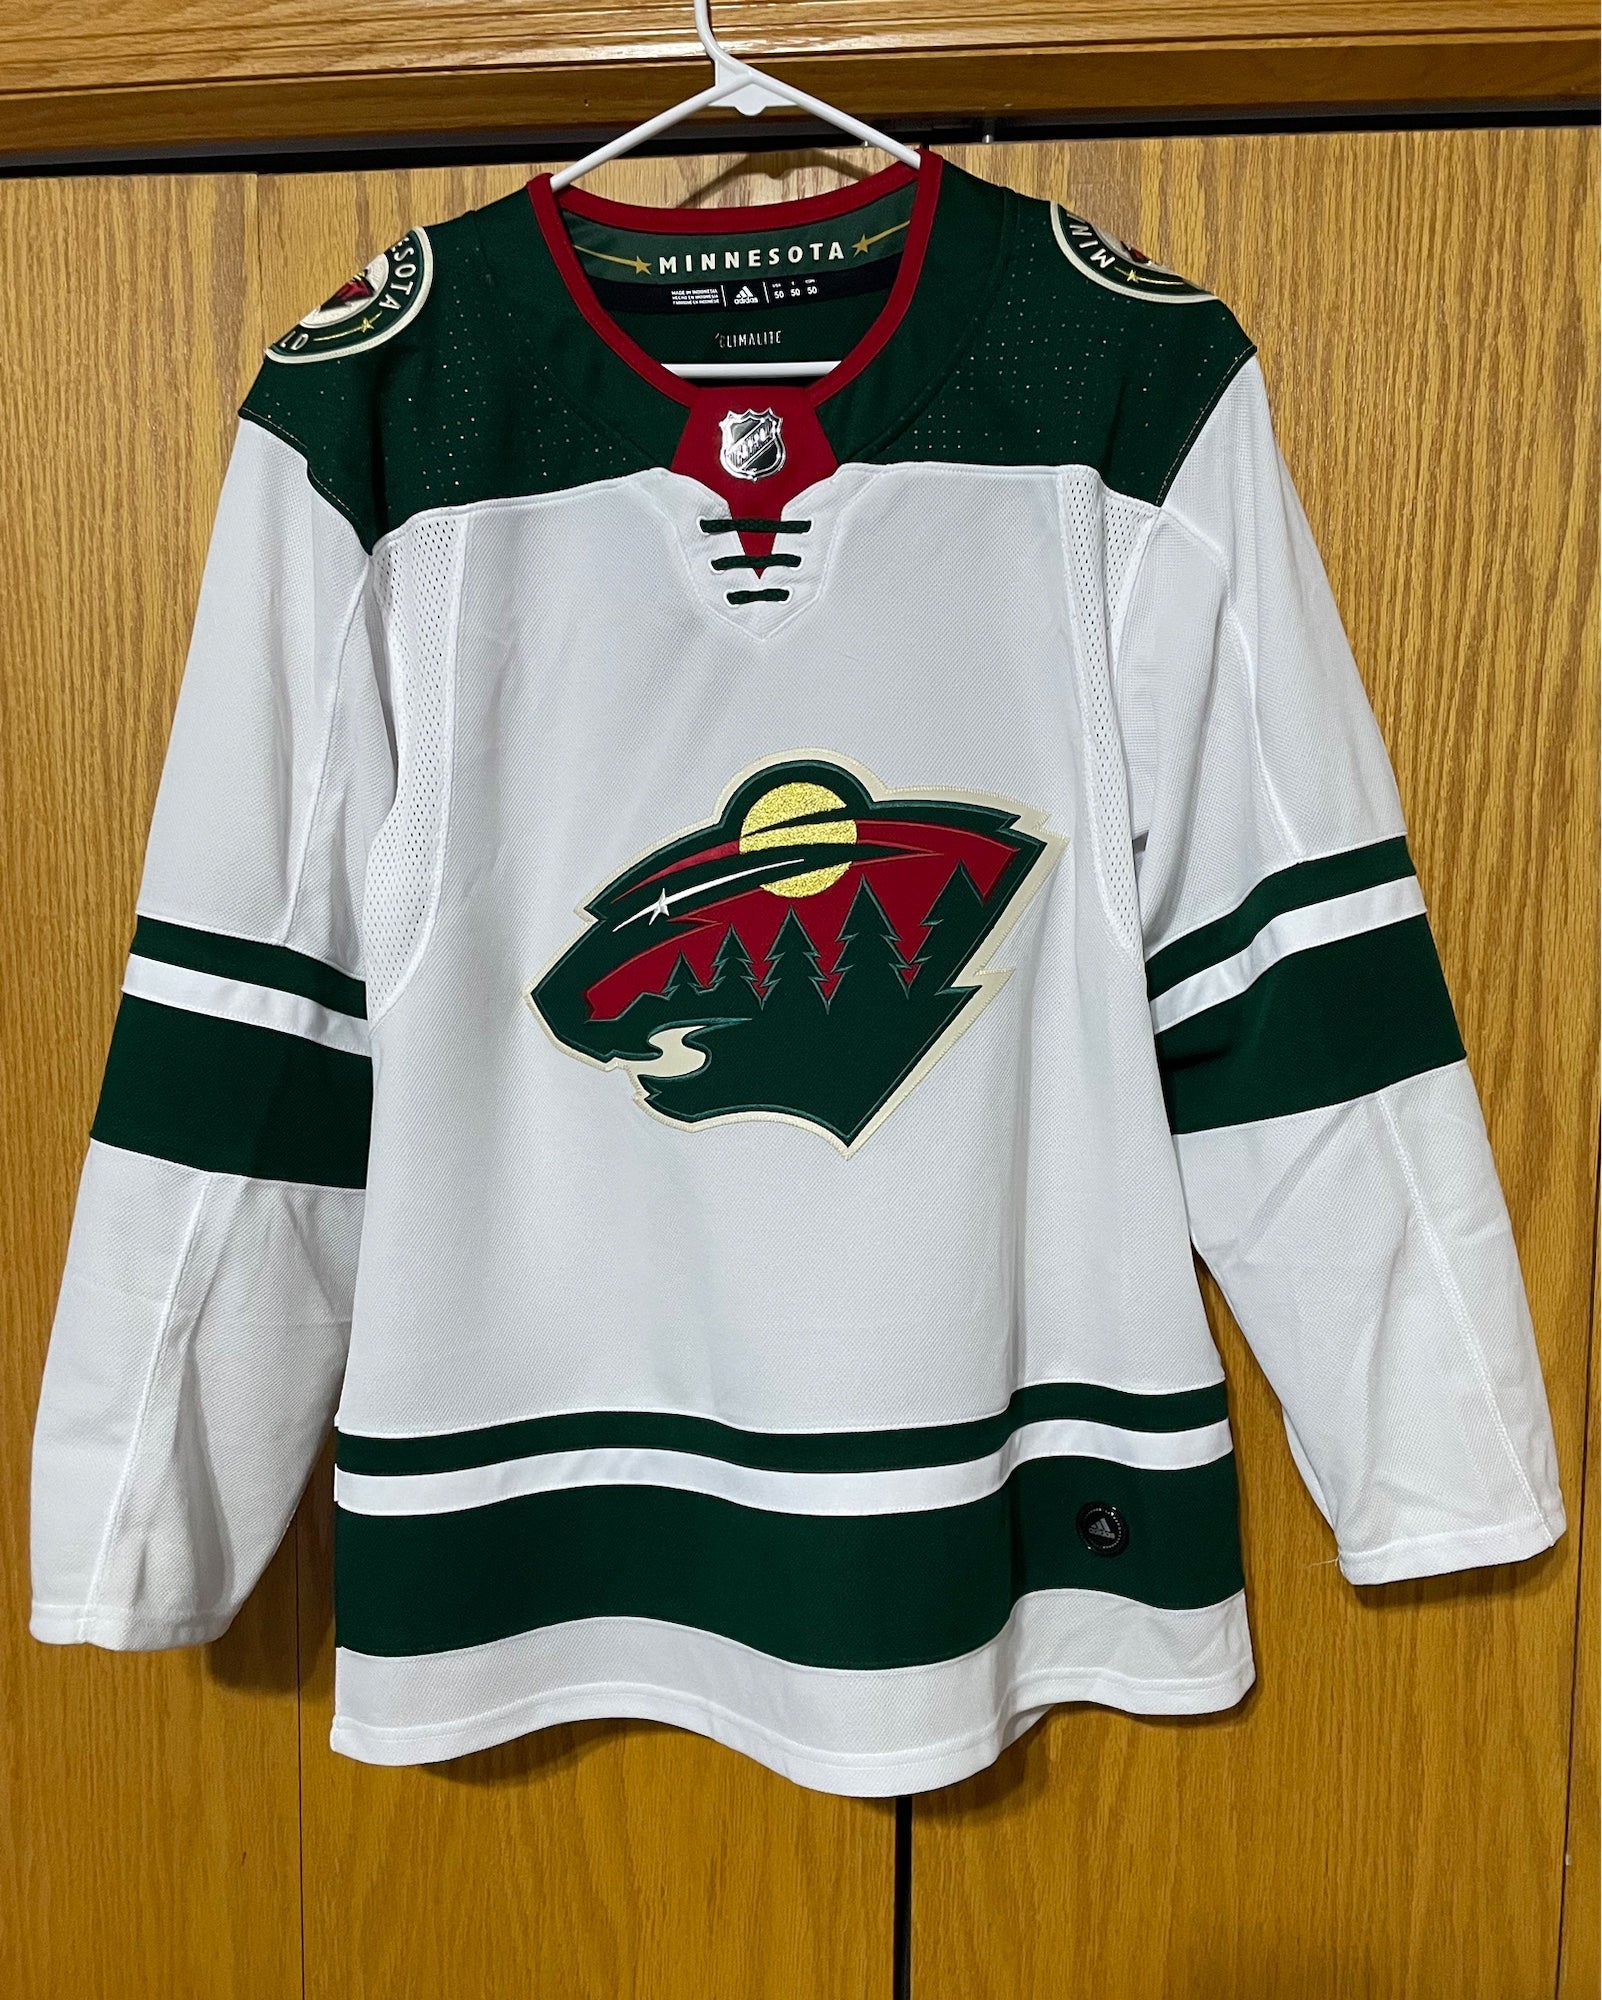 Minnesota Wild Authentic NHL Adidas Climalite Hockey Jersey Mens 50 (Home)